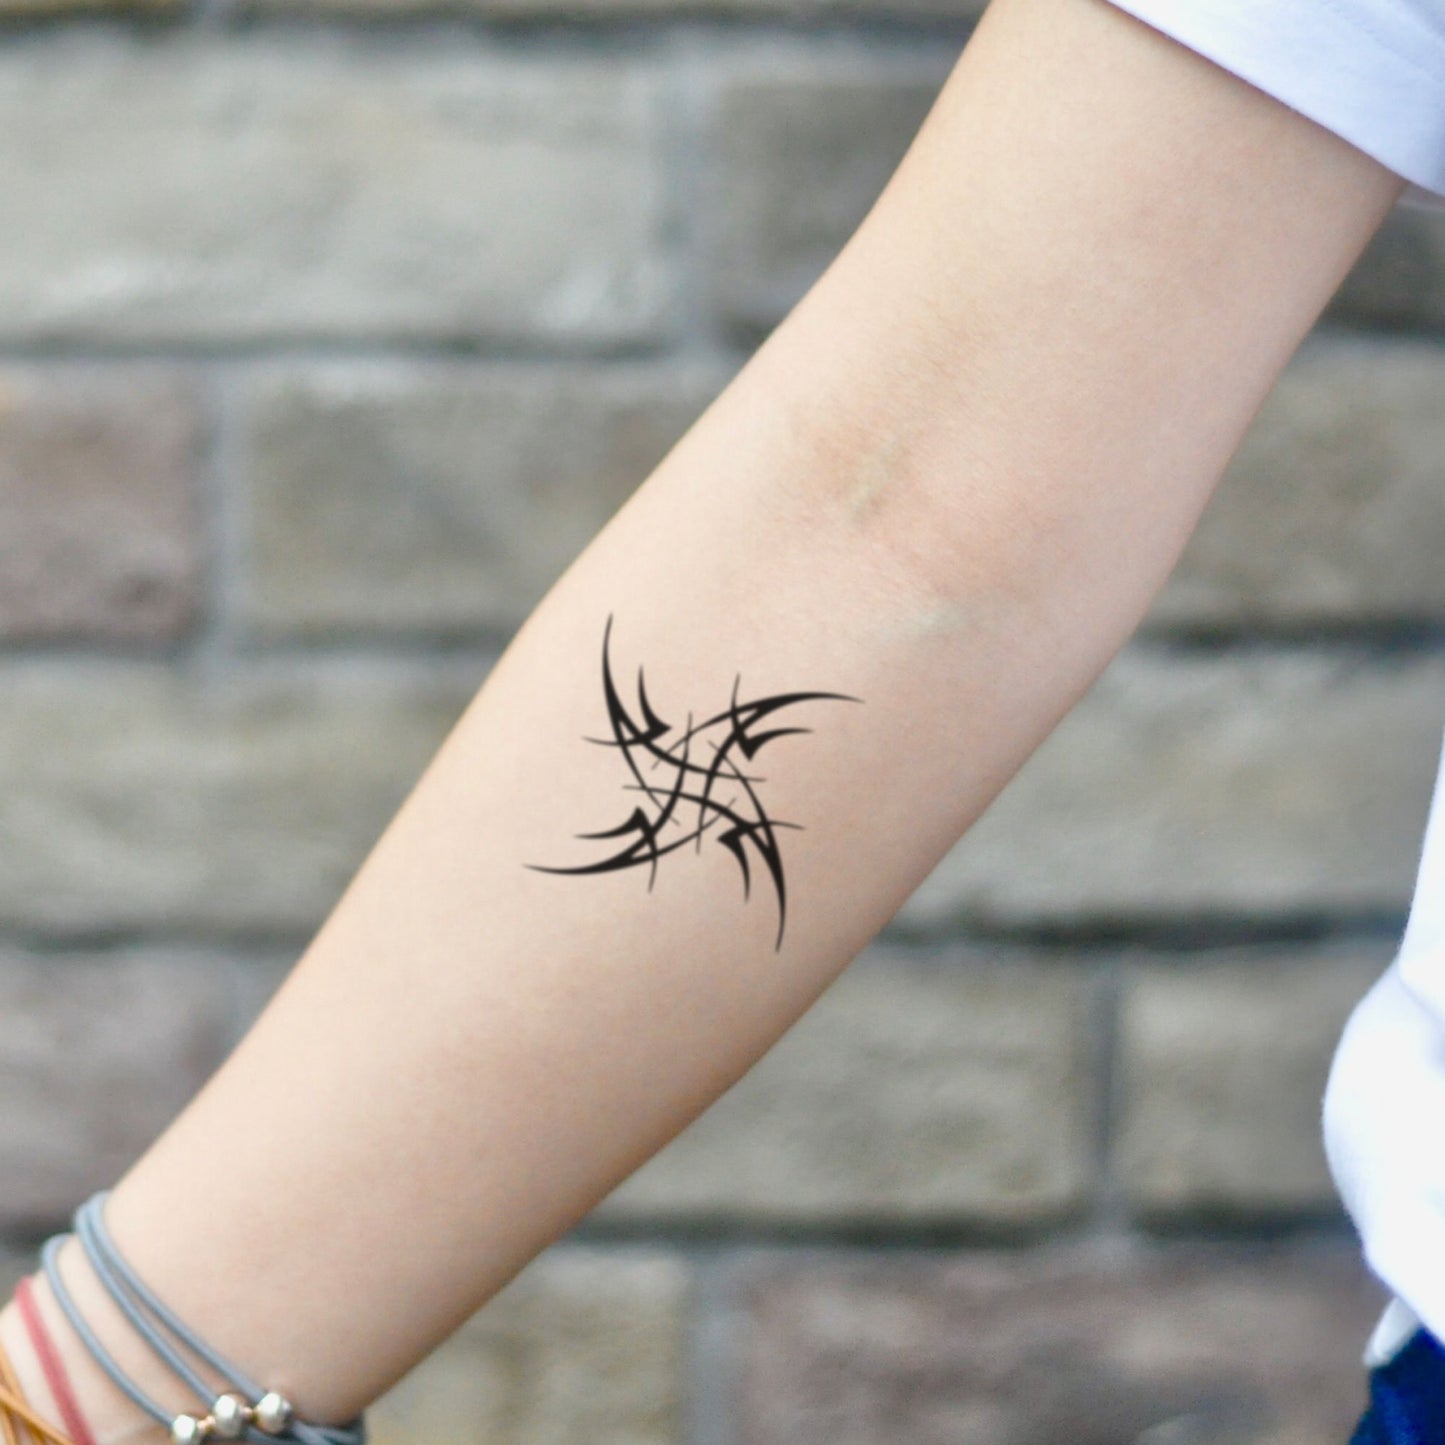 fake small ninja star pinwheel geometric temporary tattoo sticker design idea on inner arm